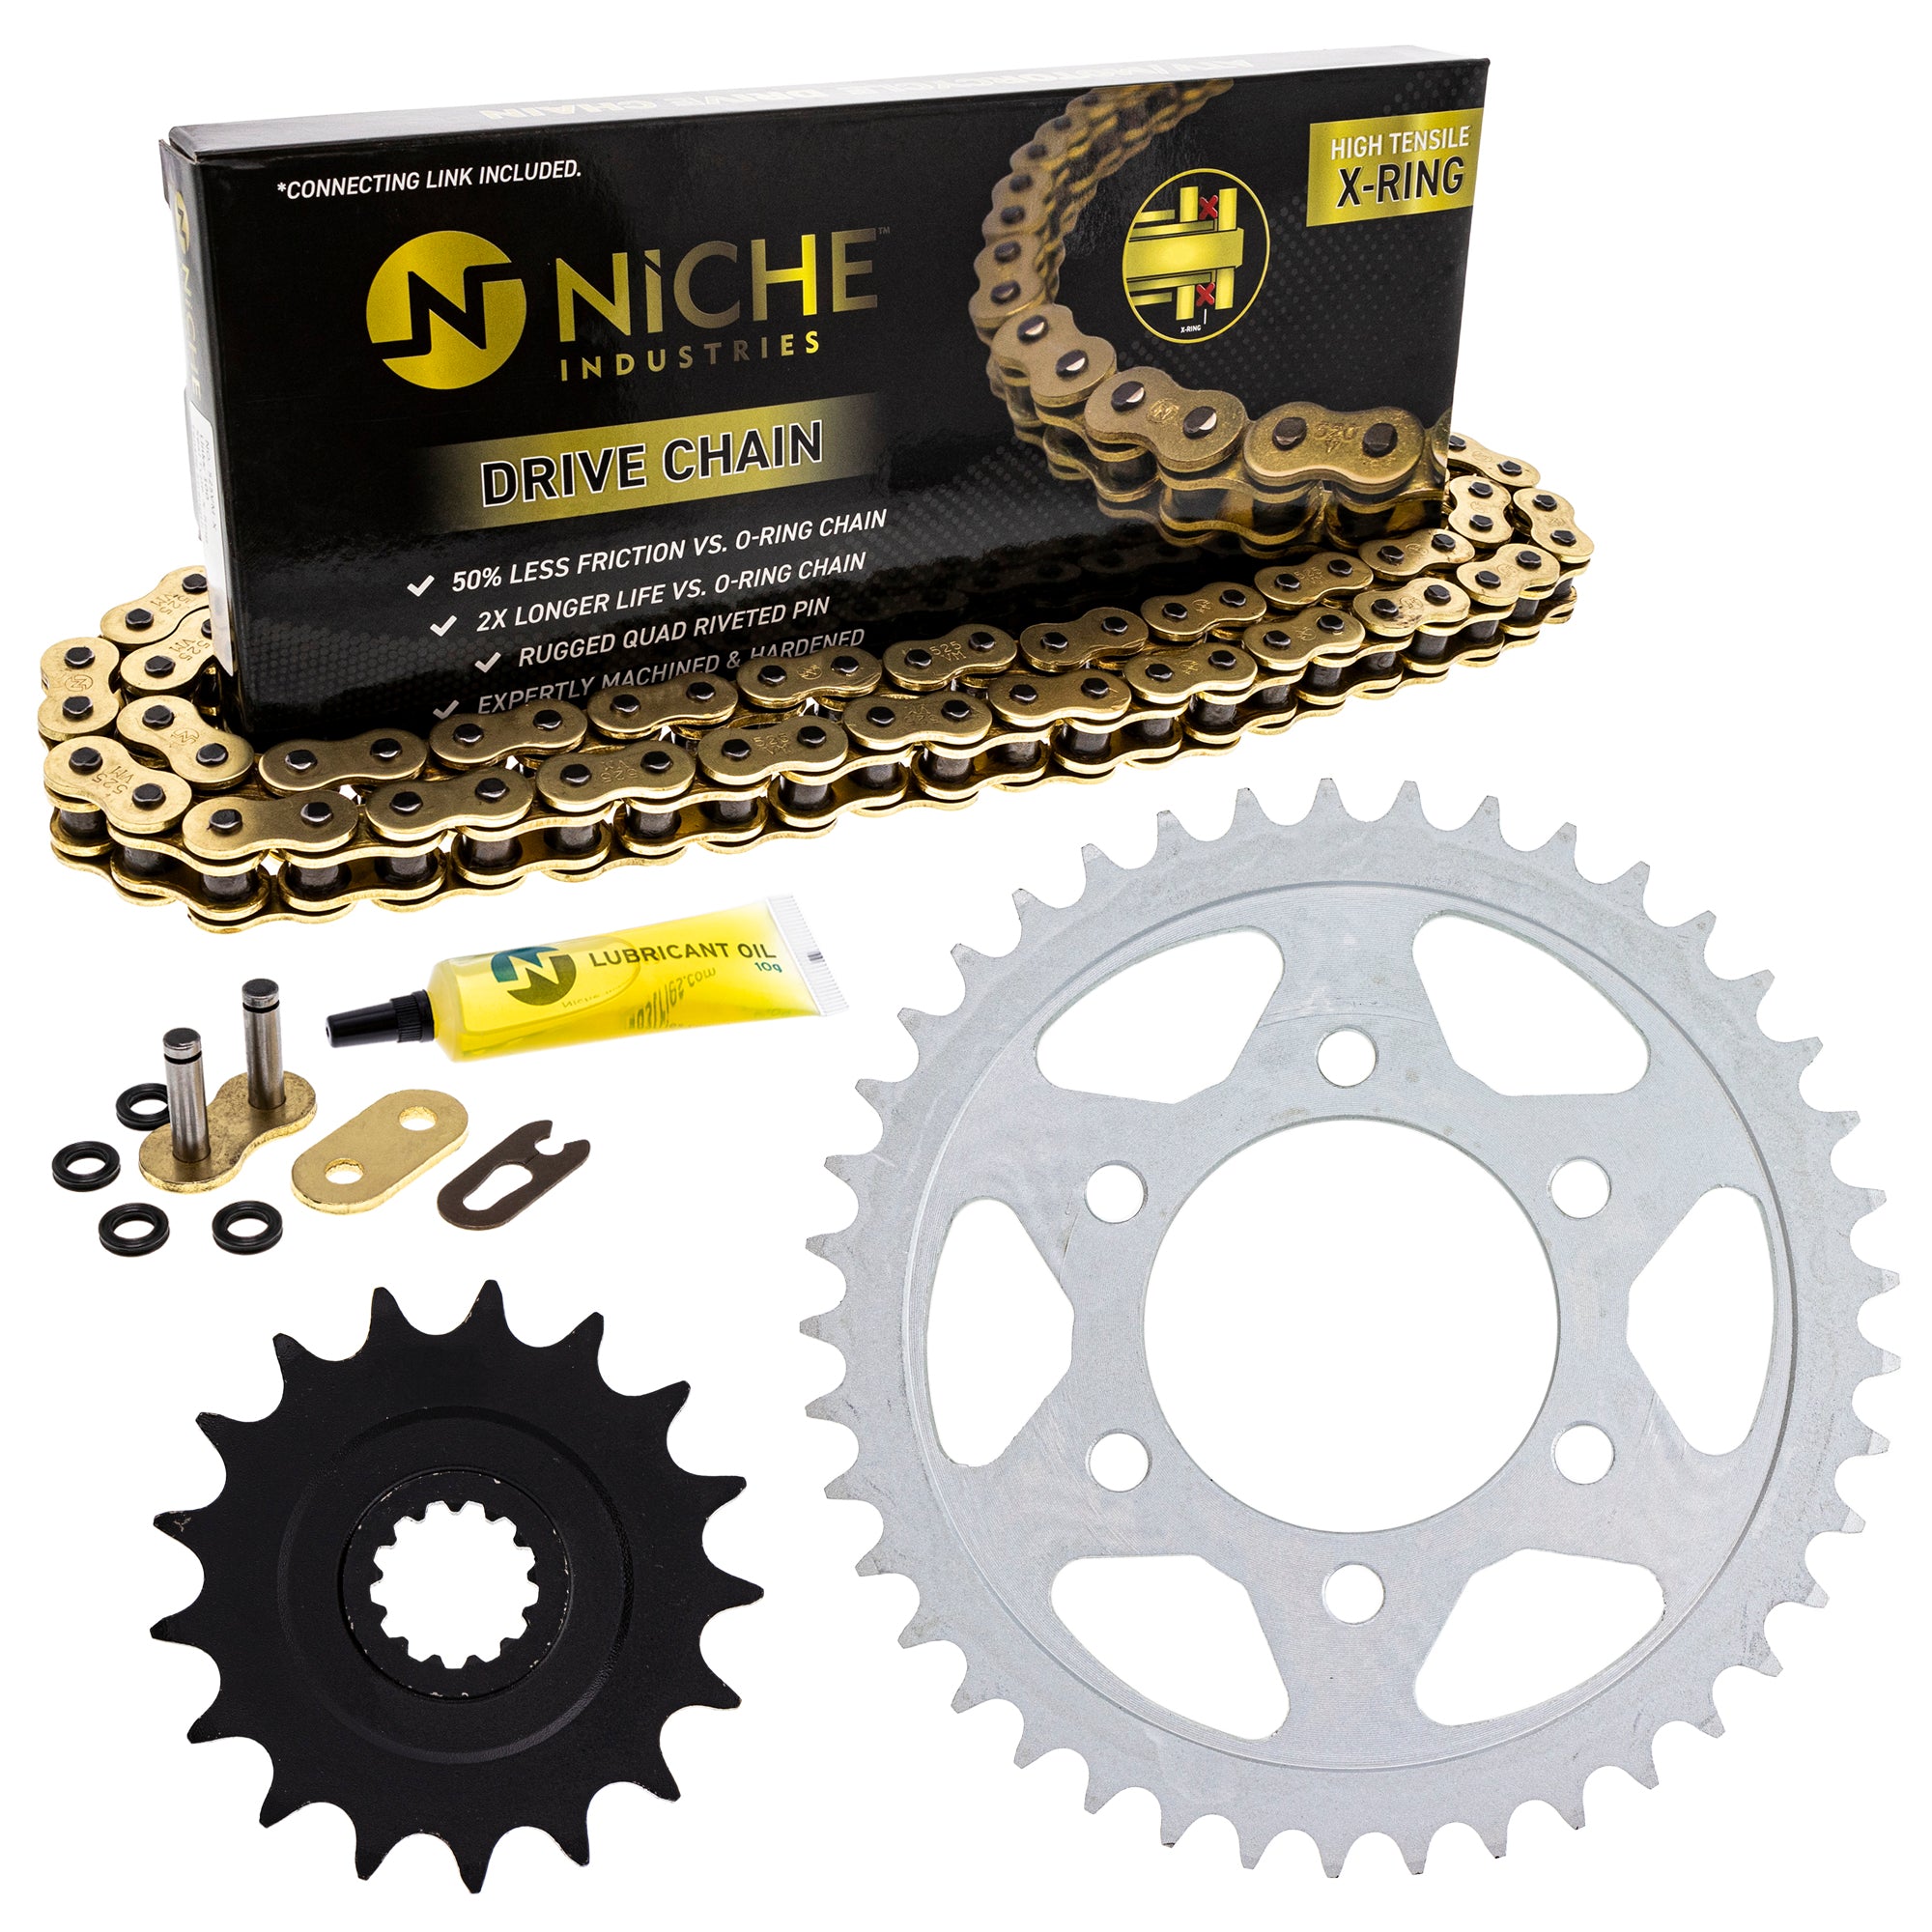 Drive Sprockets & Chain Kit for zOTHER Ninja 519-KCS1334K-K001 NICHE MK1004862